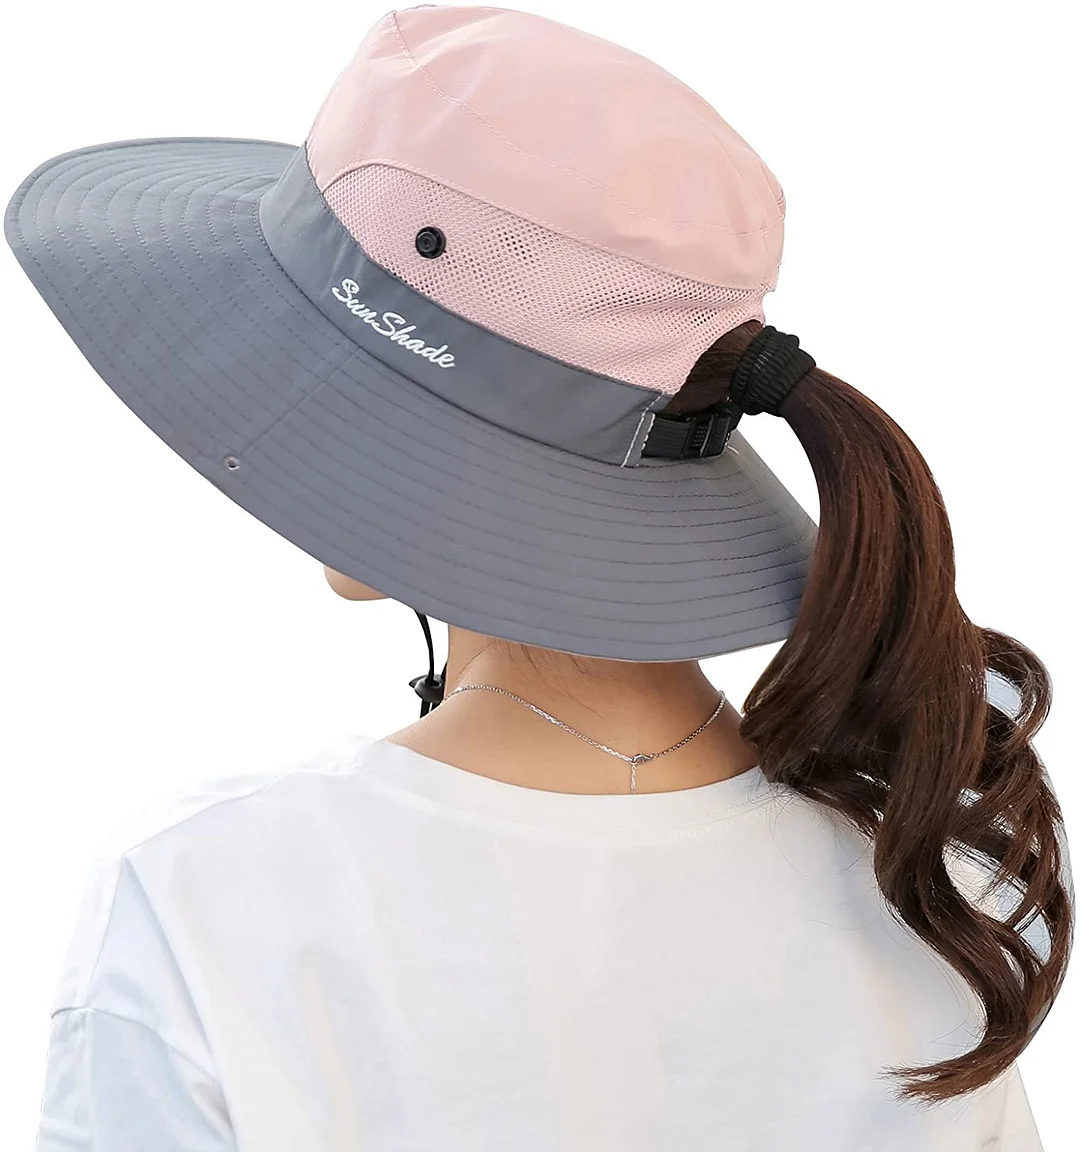 Women's Summer Sun UV Protection Hat Foldable Wide Brim Boonie Hats for Beach Safari Fishing